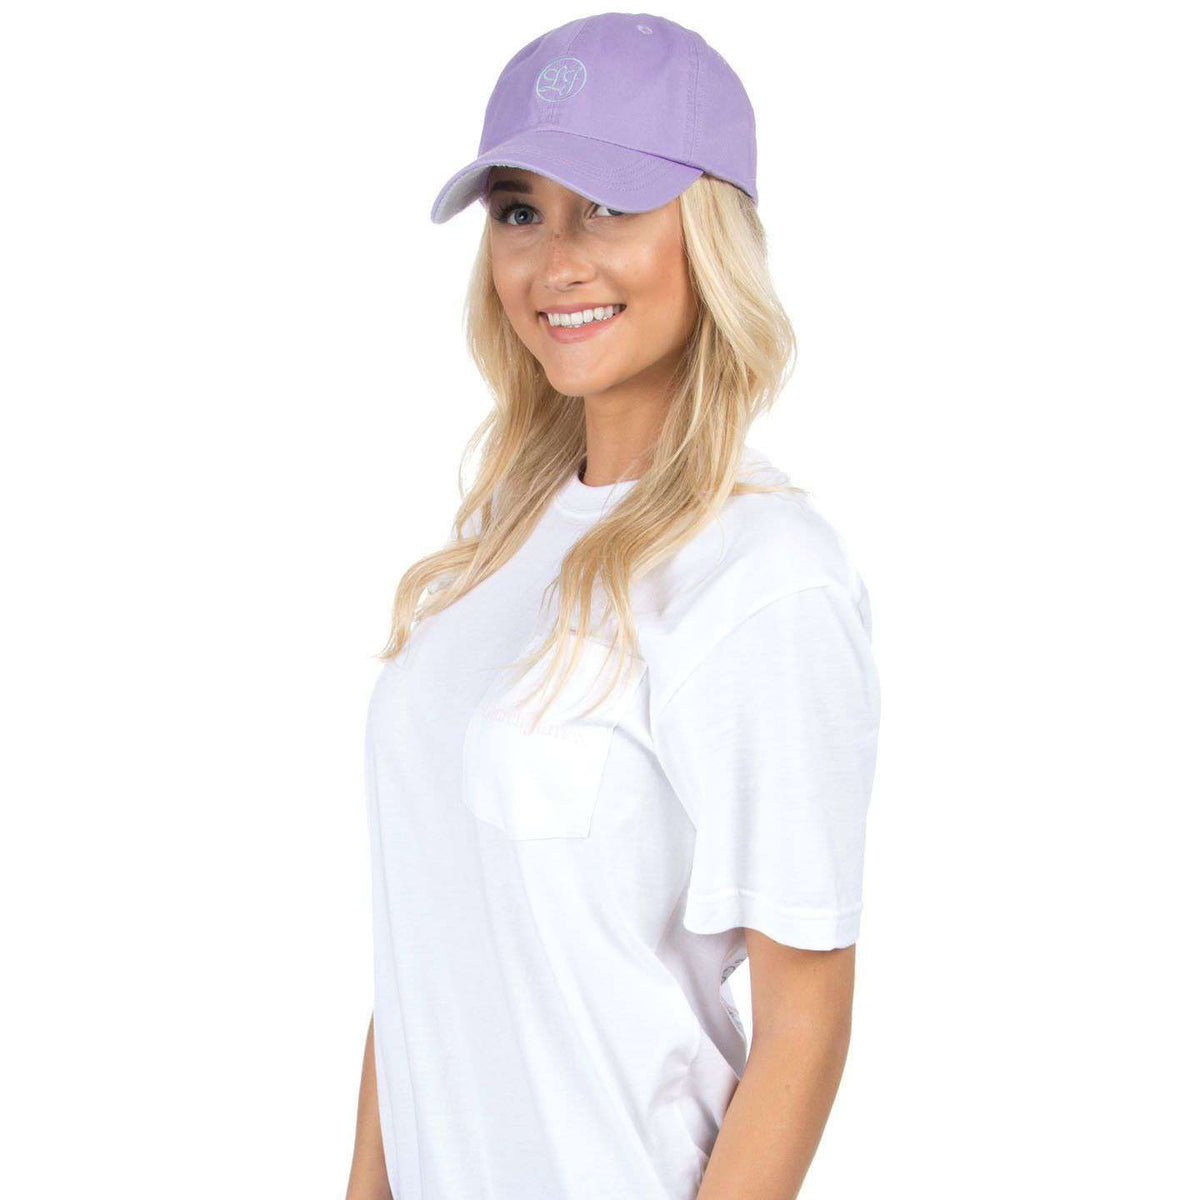 Baseball Hat in Lavender by Lauren James - Country Club Prep